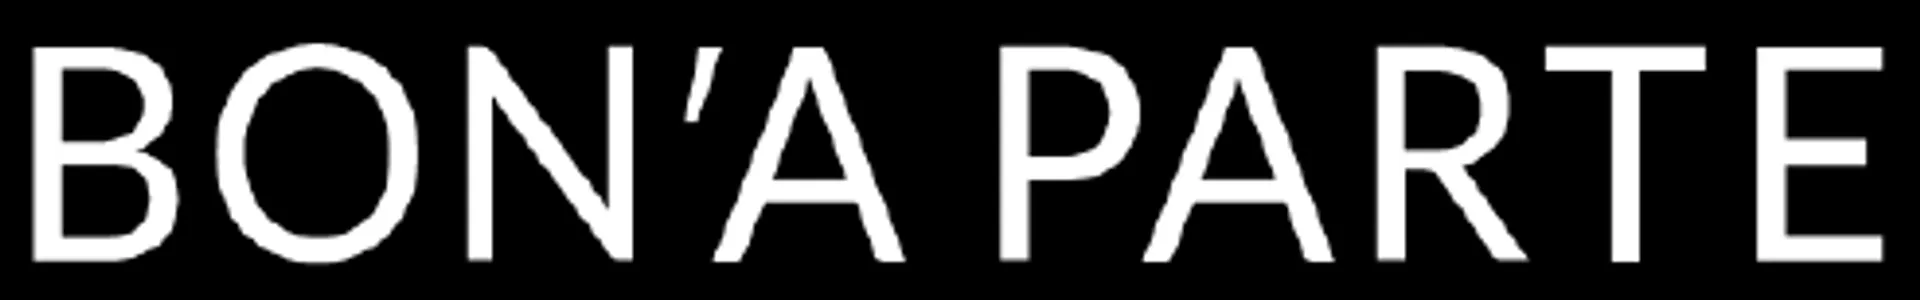 BONA PARTE logo of current catalogue